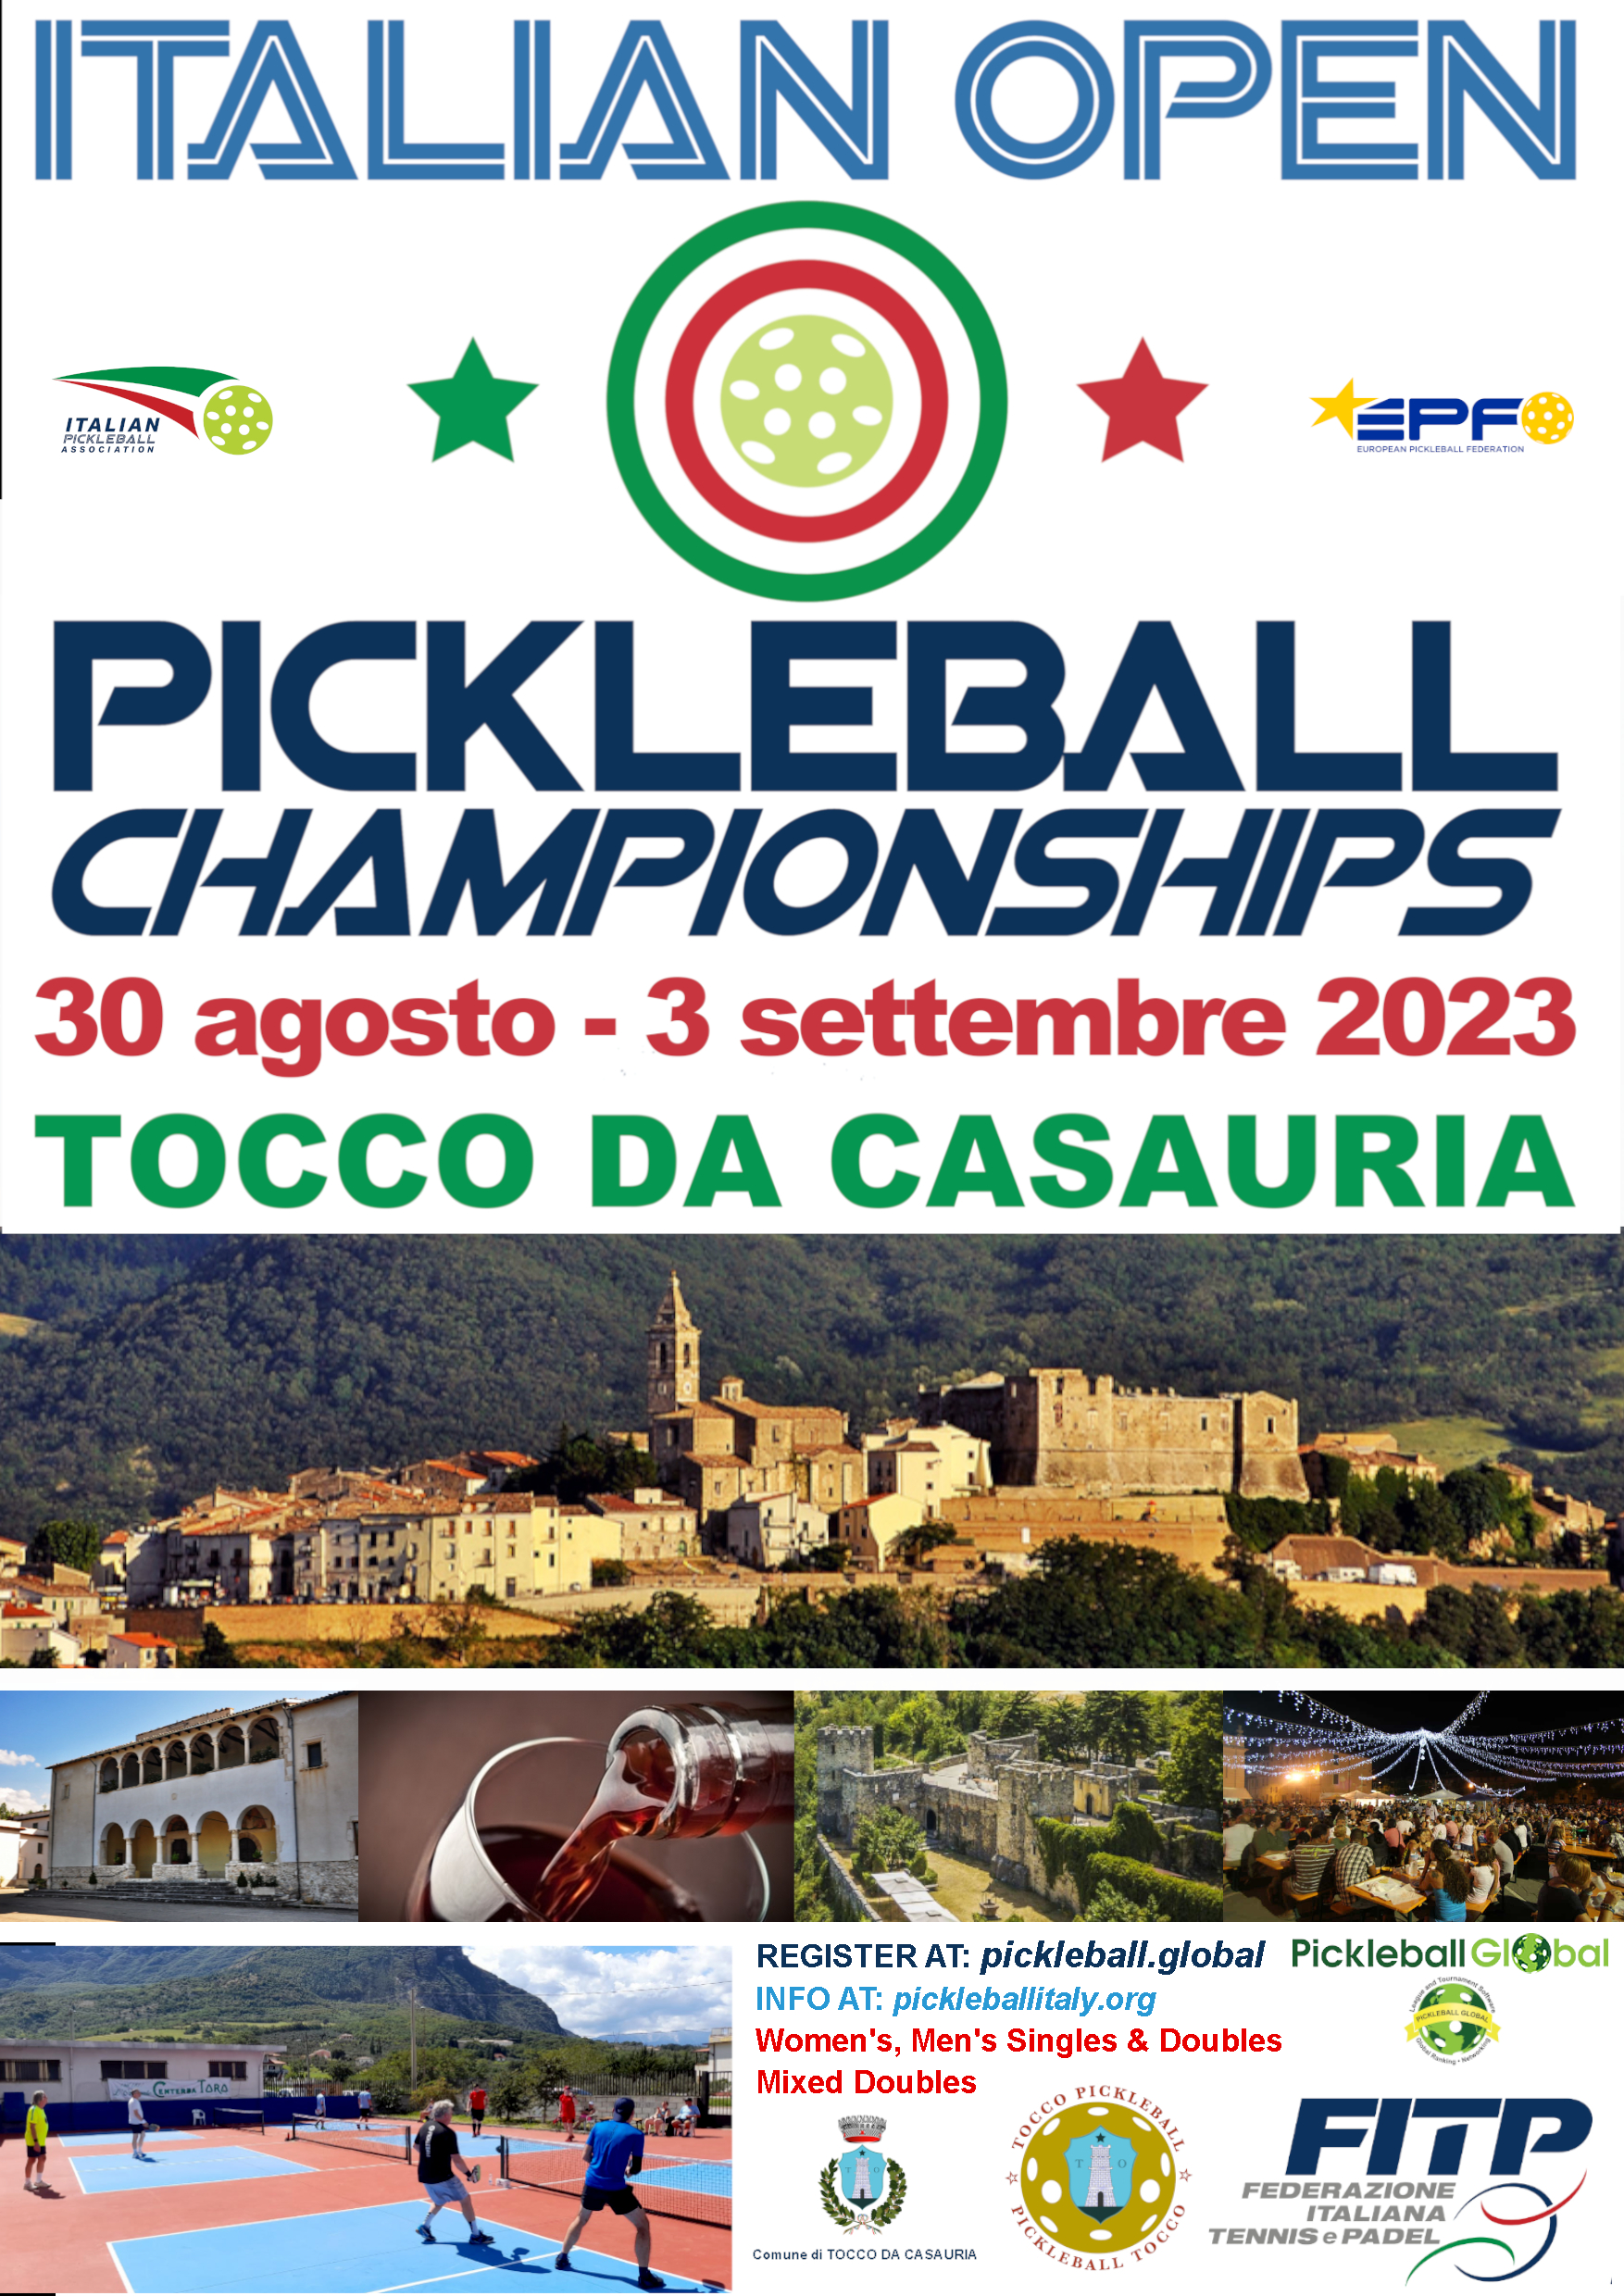 ITALIAN OPEN PICKLEBALL CHAMPIONSHIPS 2023 – European Pickleball Federation